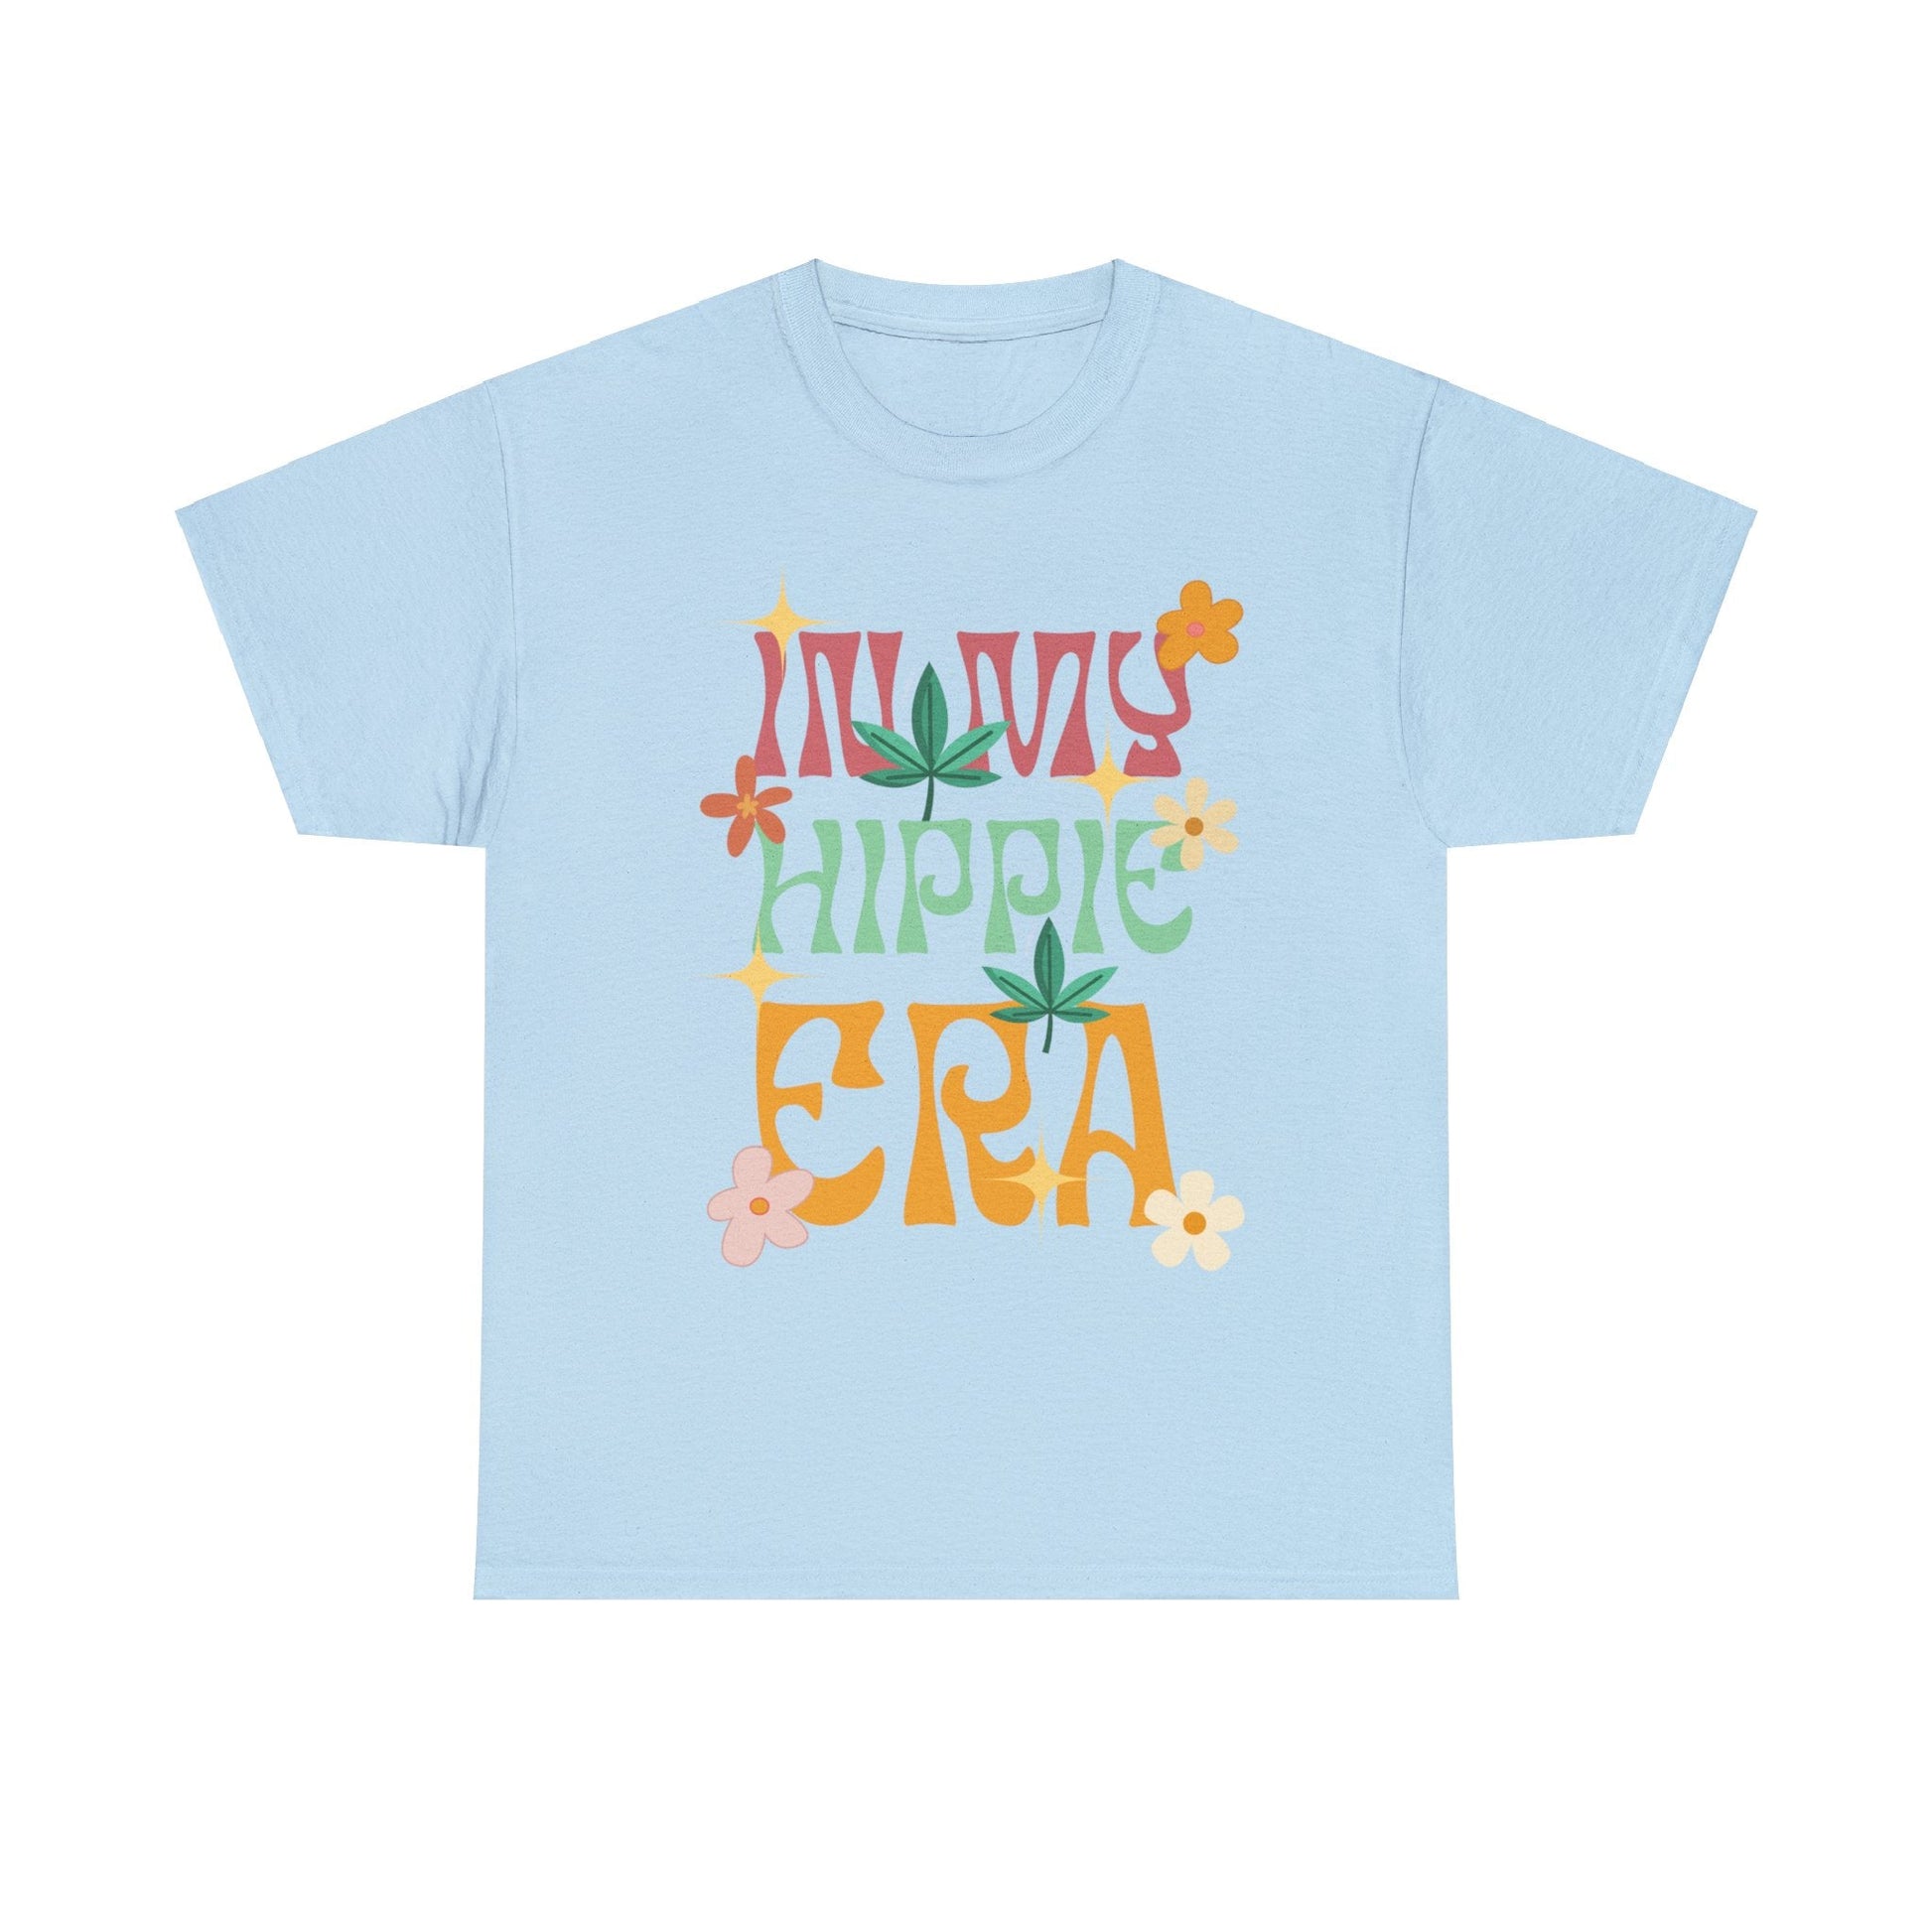 In My Hippie Era Shirt, Hippie Shirt, Gift for Hippies , Favourite Hippie Shirt, Hippie Gift from Daughter, Cool Hippie Shirt, Tee for Hippies - Moikas